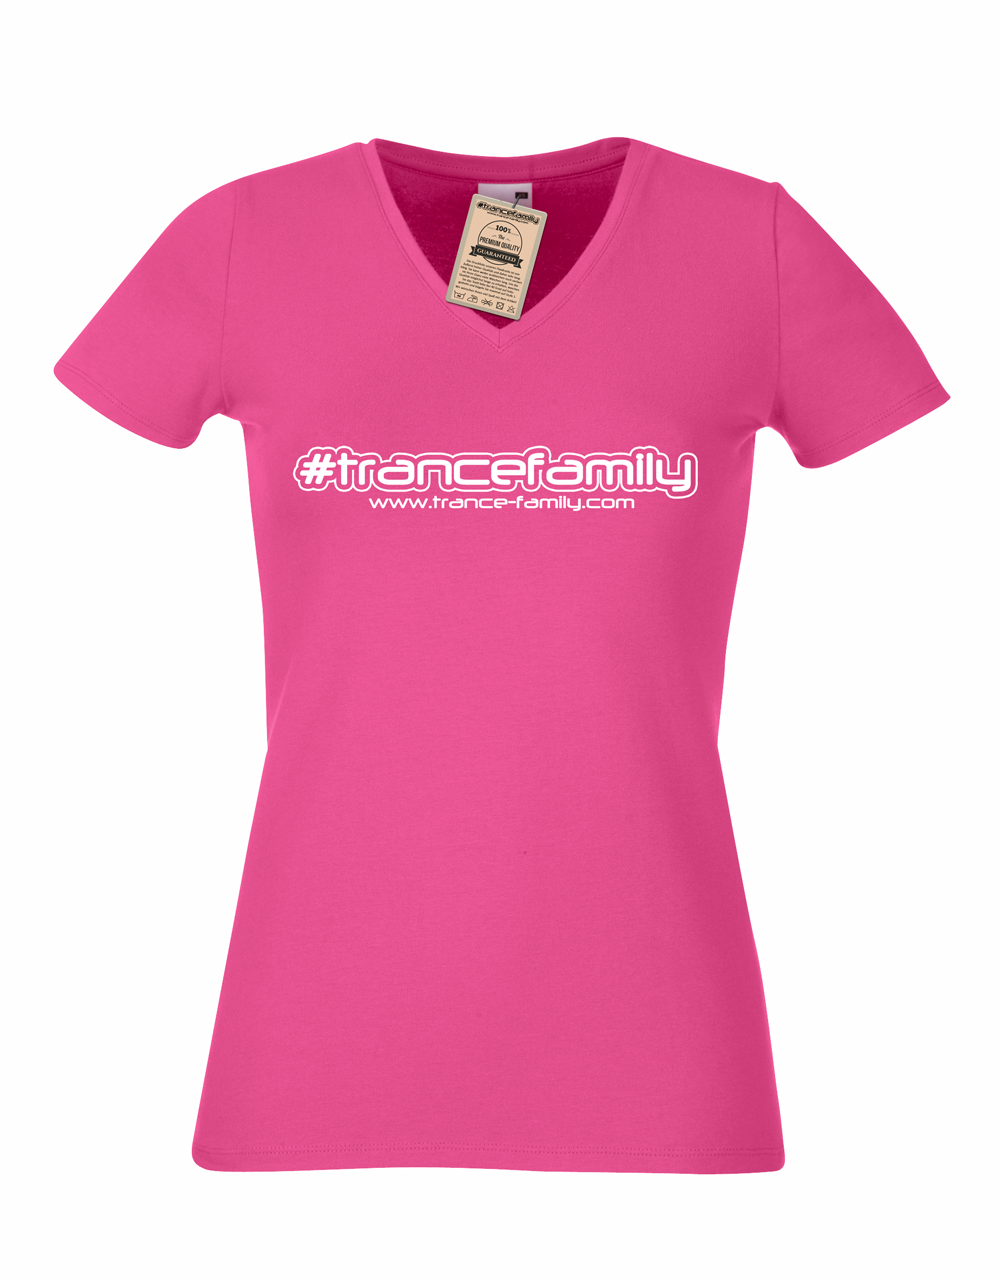 Trance-Family.com  (#trancefamily T-Shirt Women)